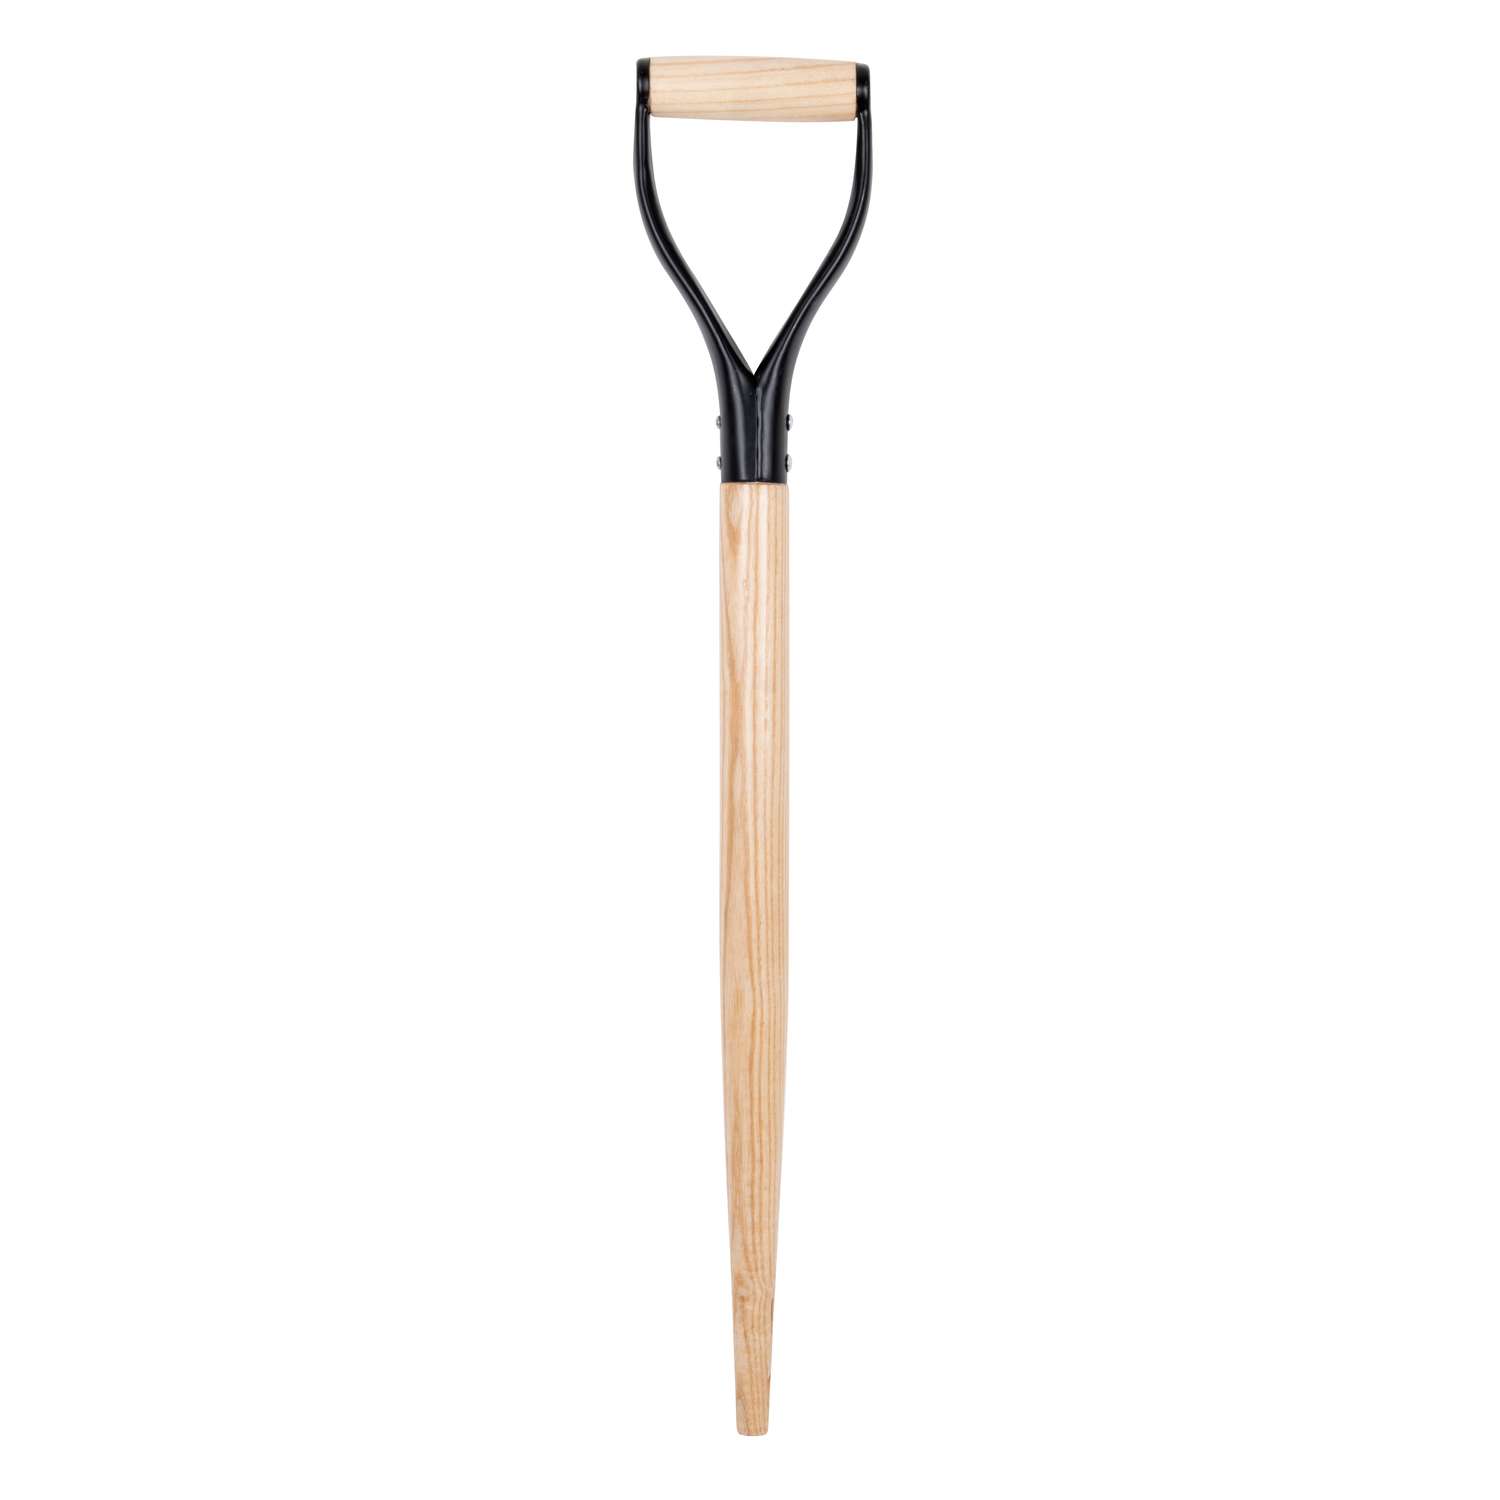 Solid Iron Shovel Handle Reusable Y Grip Replacement Accessories with Wooden Grip for Garden Digging Raking Tool EMVANV Shovel Y Grip Handle Orange 